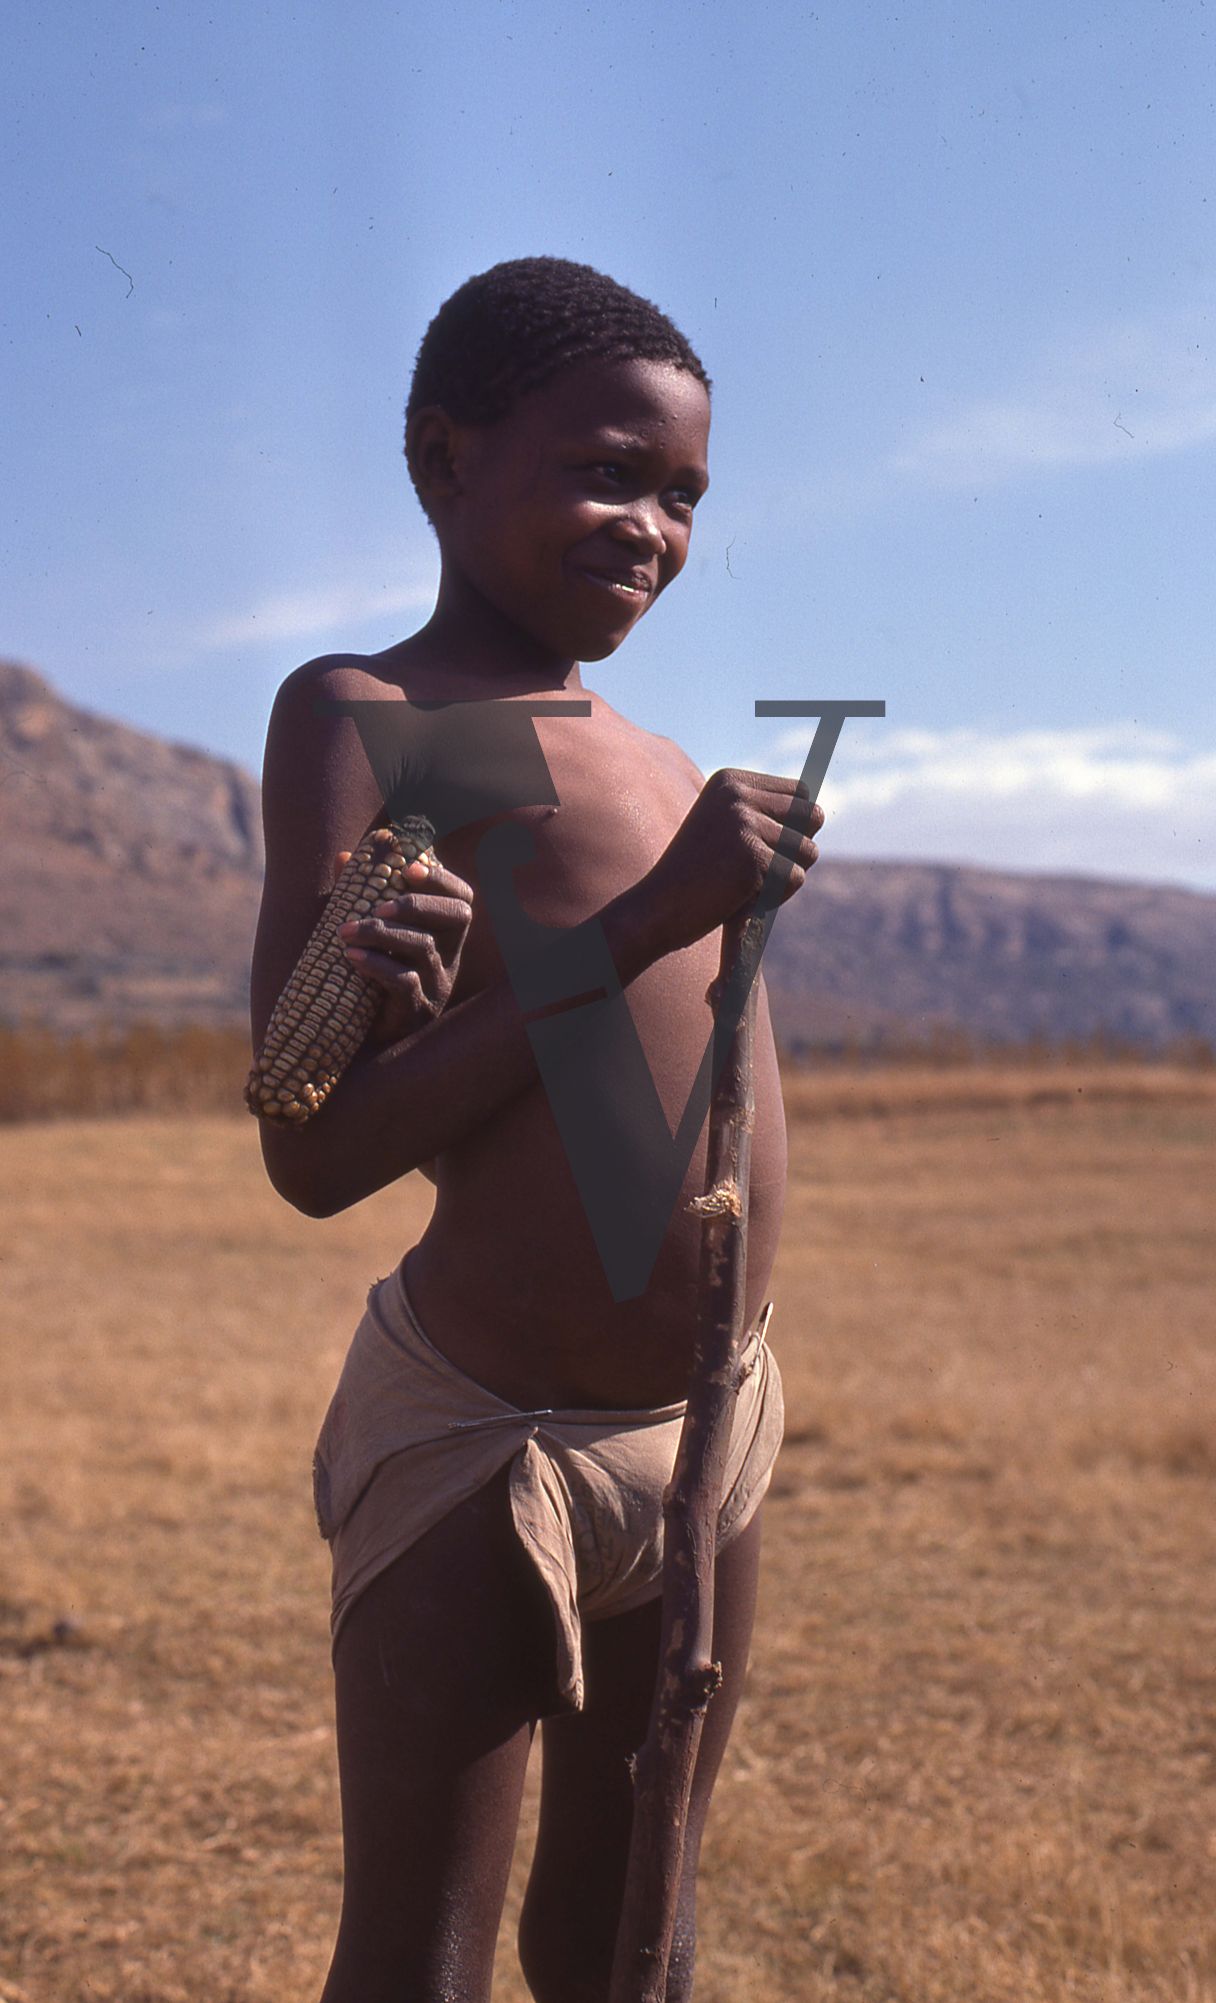 Lesotho, Handspun mohair farming community, boy with corn, smiling, portrait.